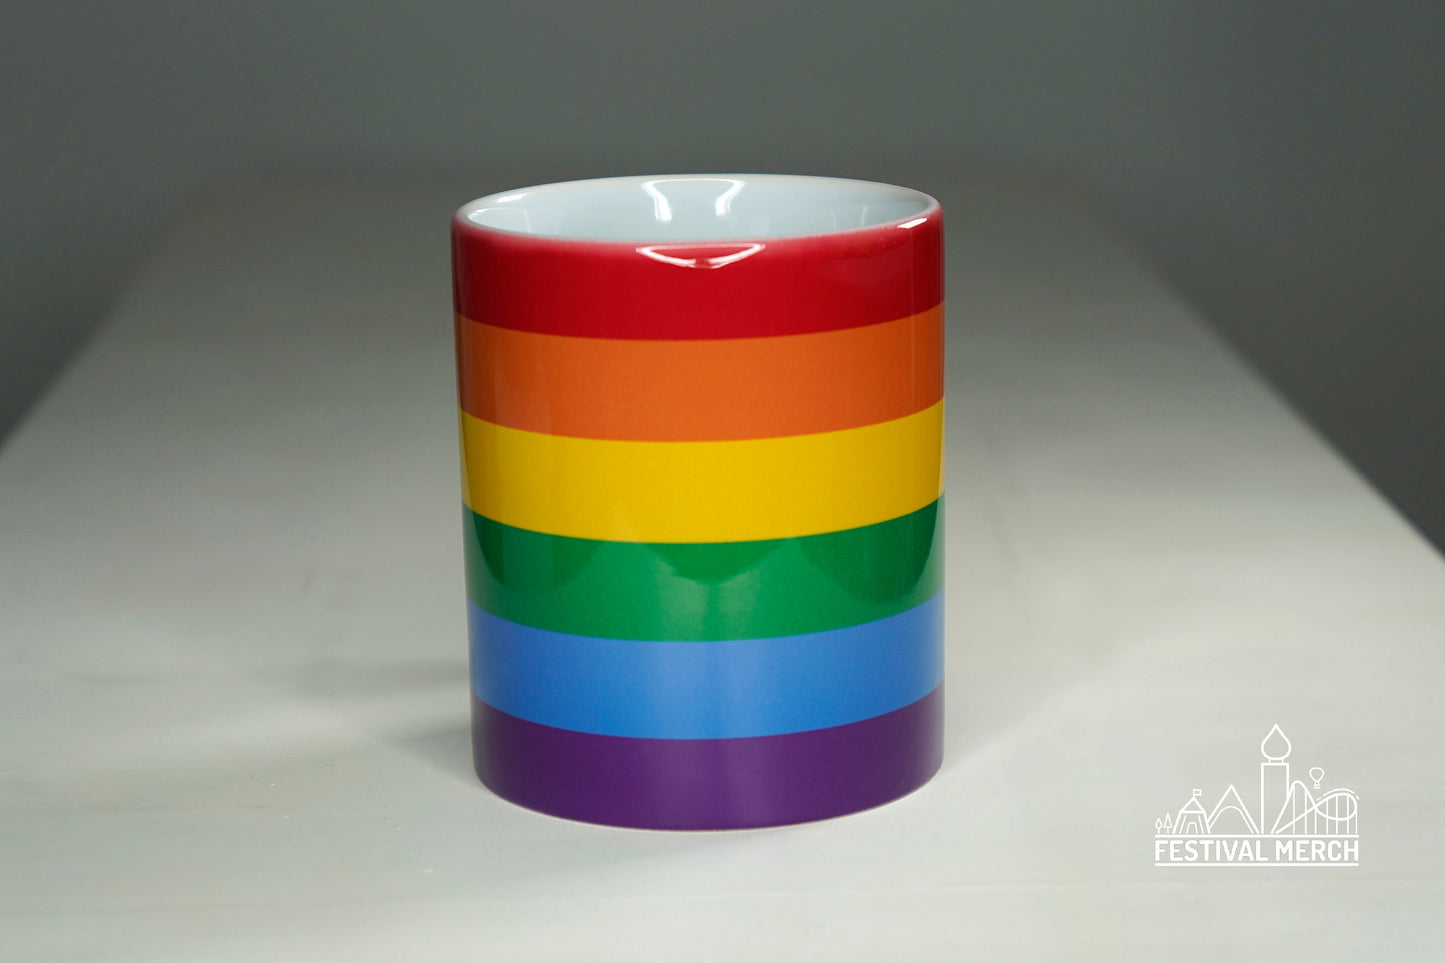 Rainbow Flag Mug (Any Flags available) Discreet Packaging! - Pride gift - LGBT Lesbian Gay Bi ally Transgender - Festival Merch